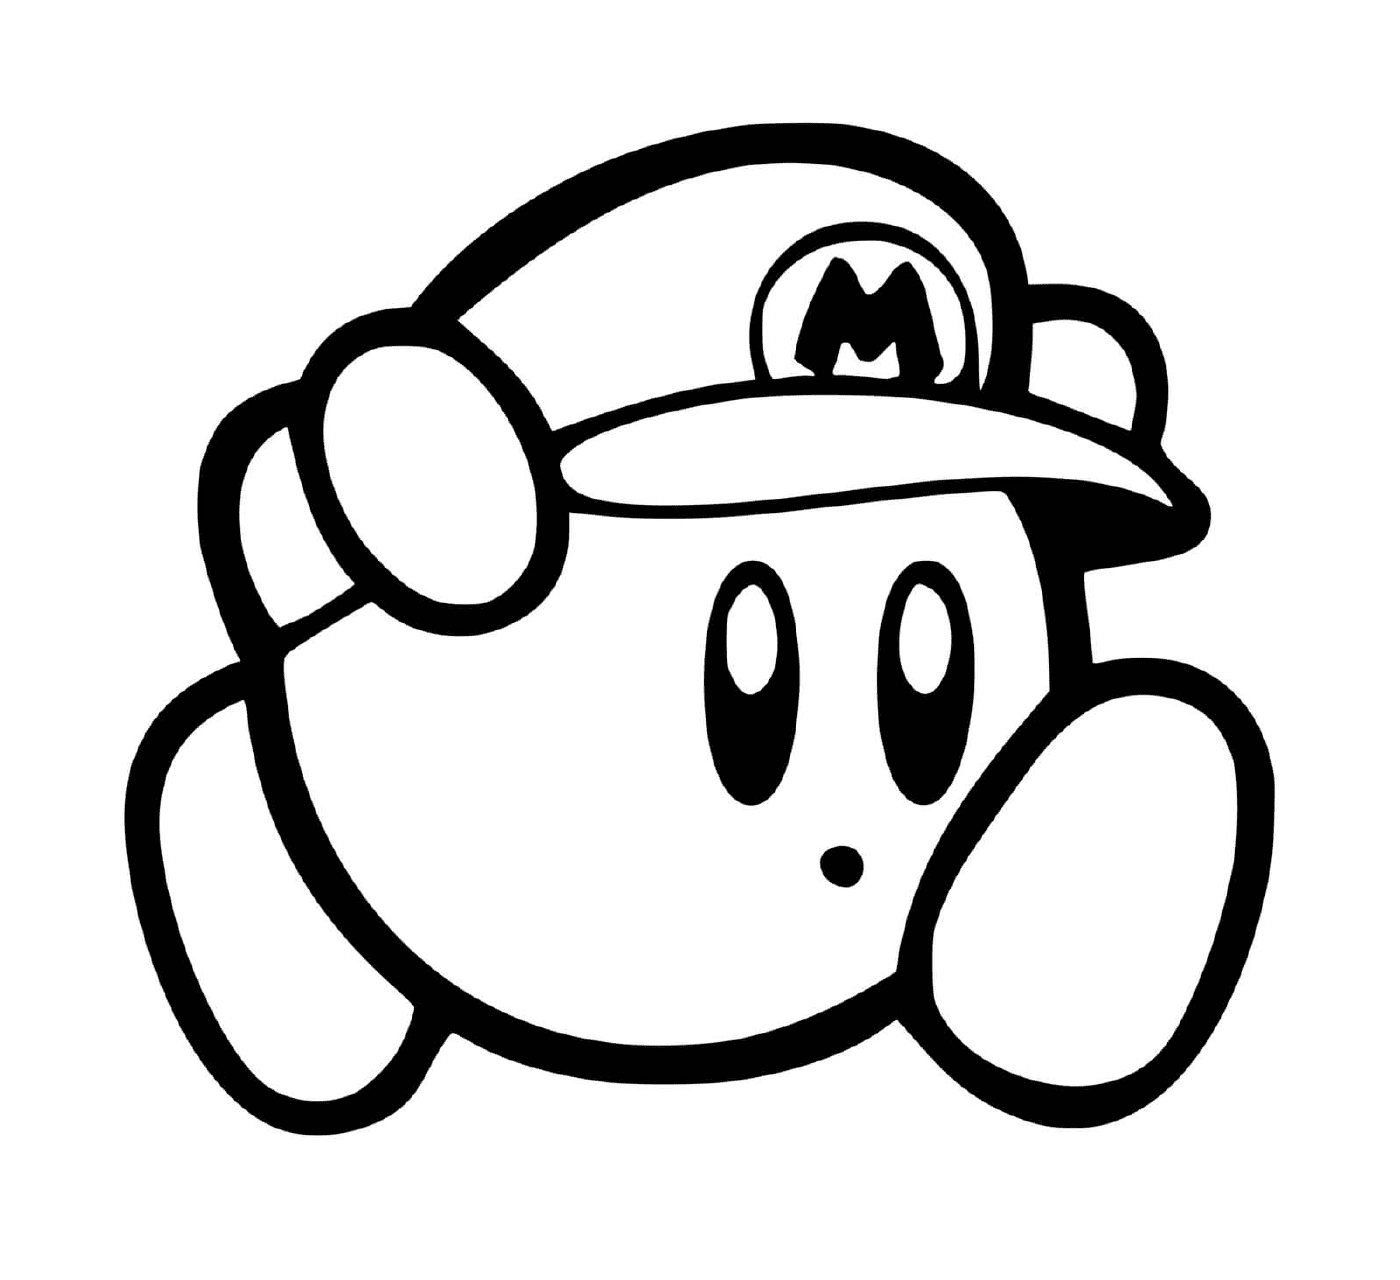  Kirby no mundo de Mario Nintendo 